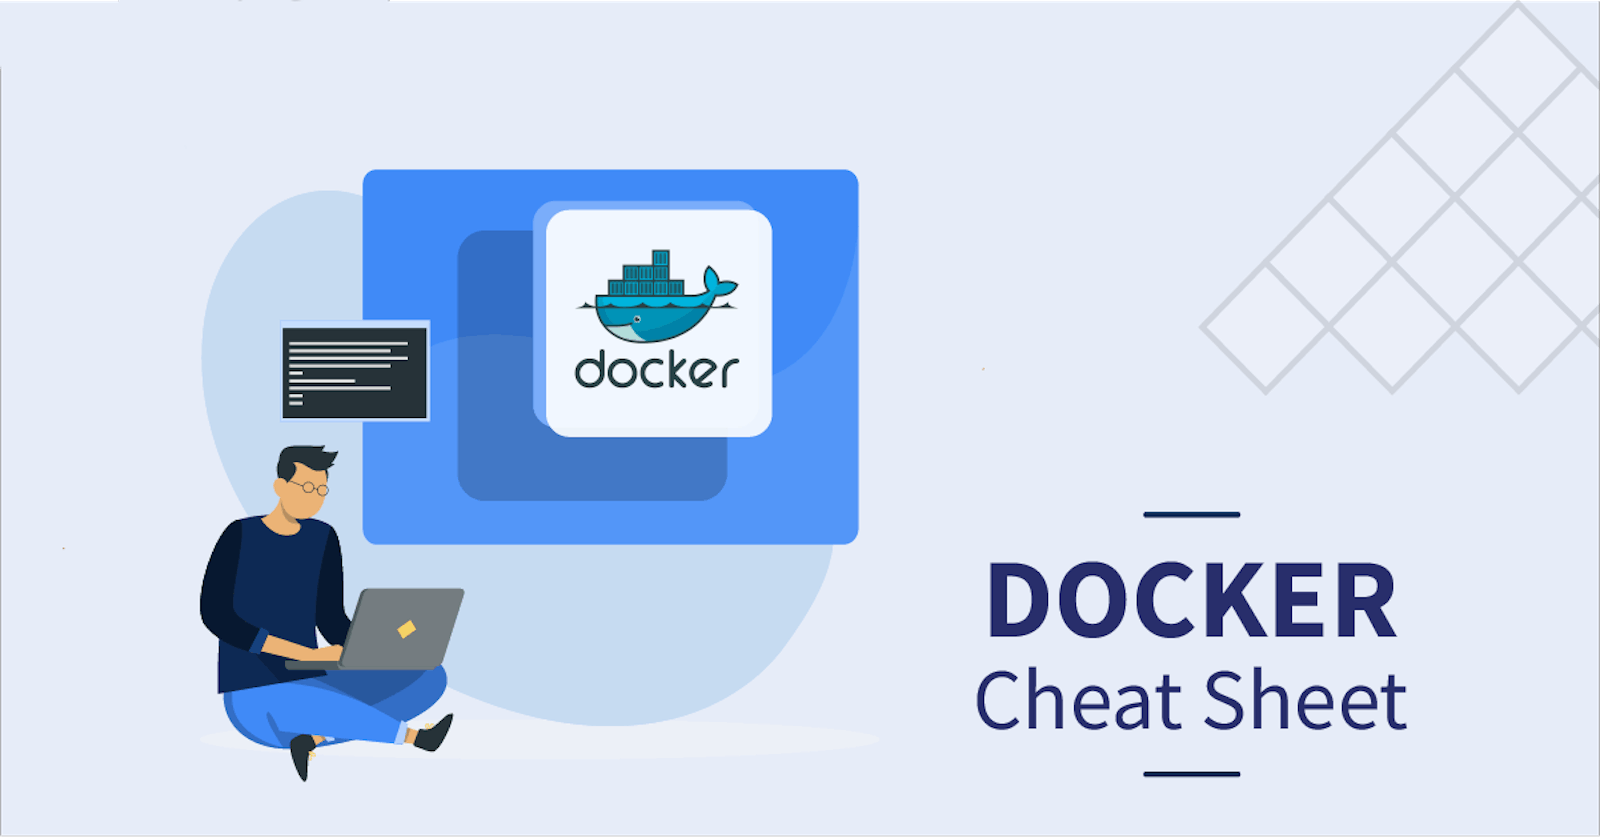 20. Docker Cheat Sheet: